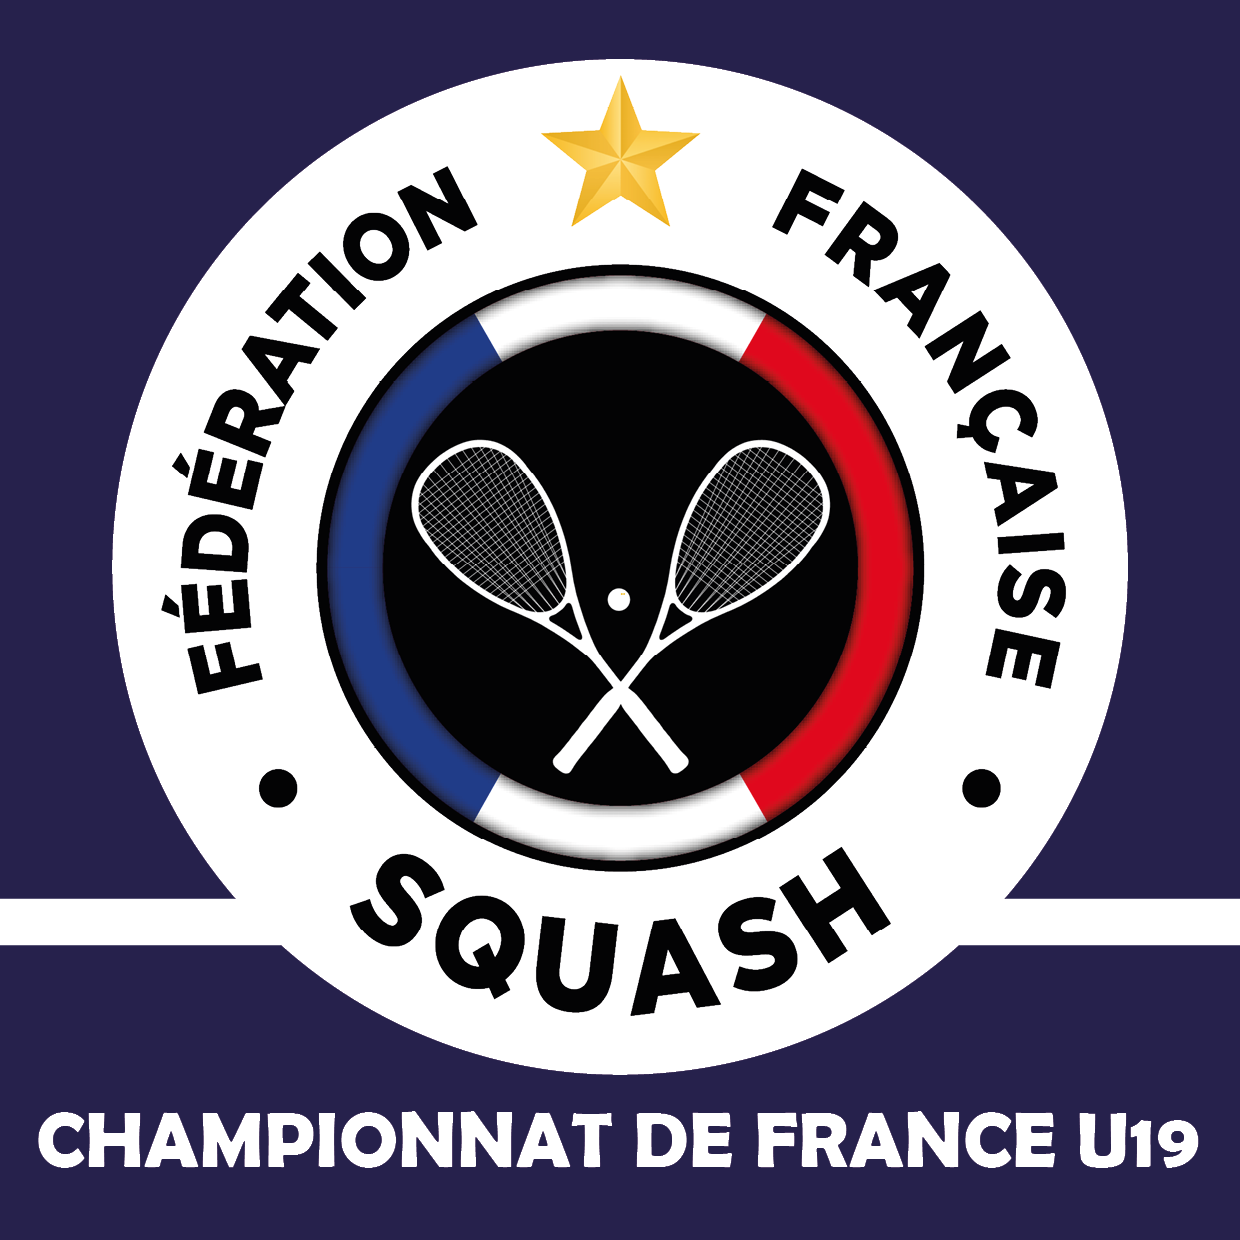 CHAMPIONNAT DE FRANCE U19